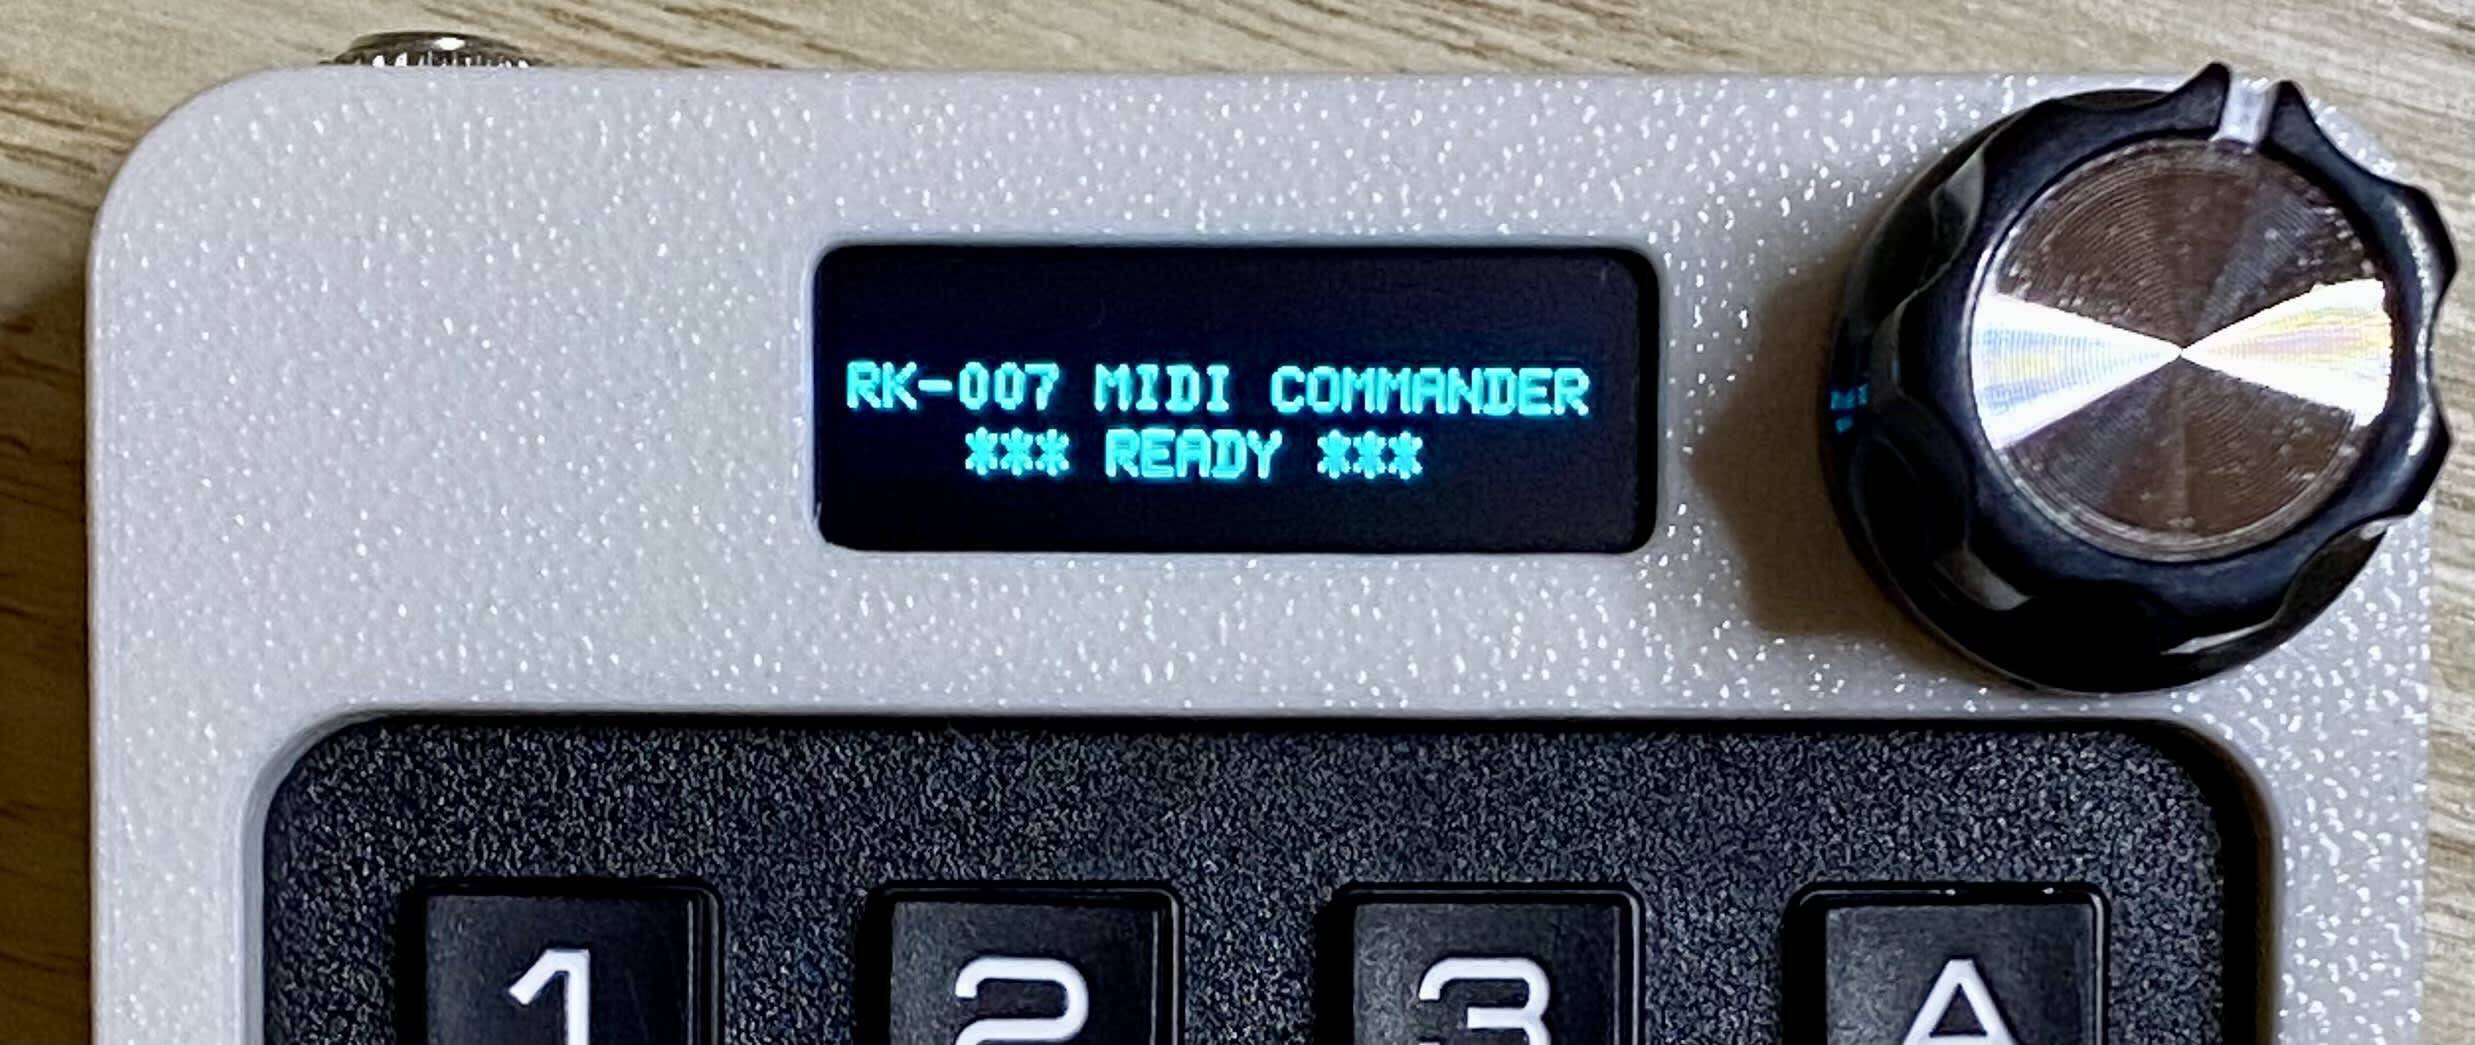 RK-007 MIDI Commander - Improved